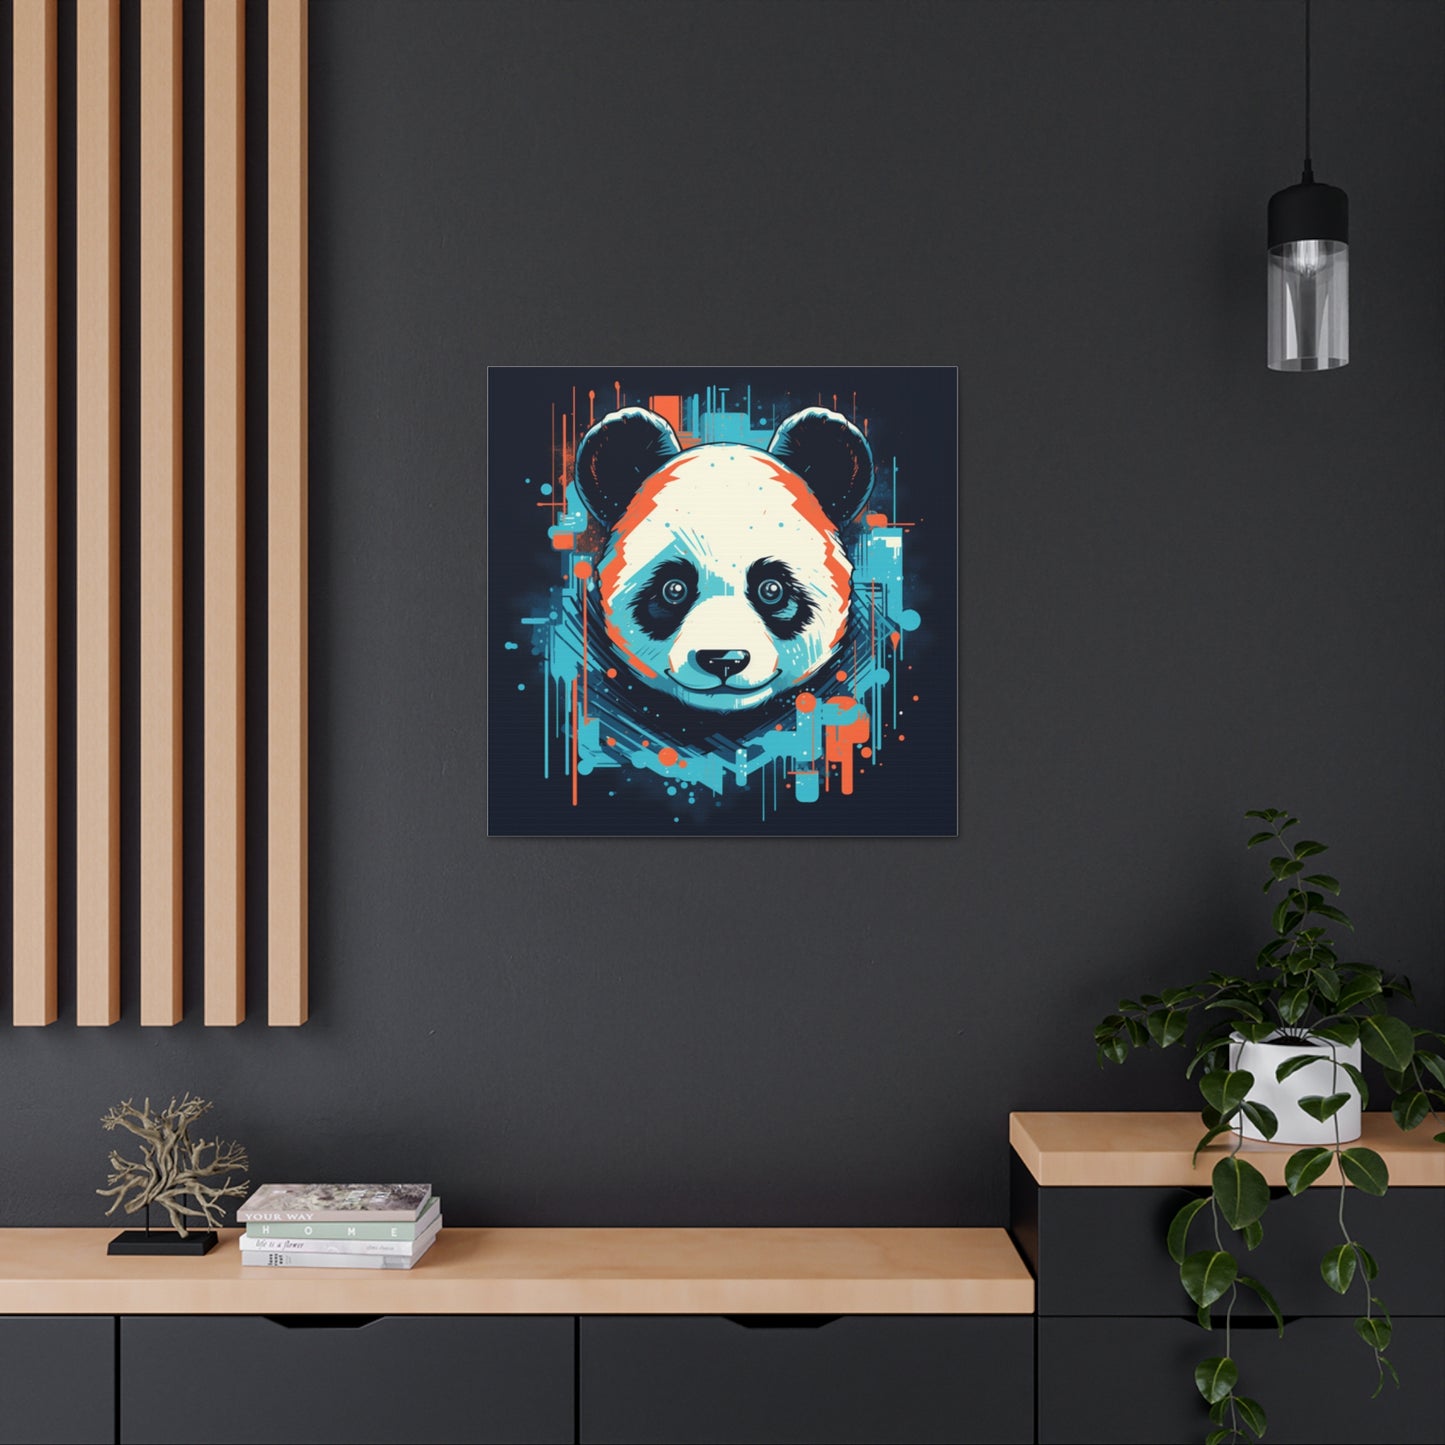 Canvas Gallery Wraps - T-shirt design featuring a pixelated panda art